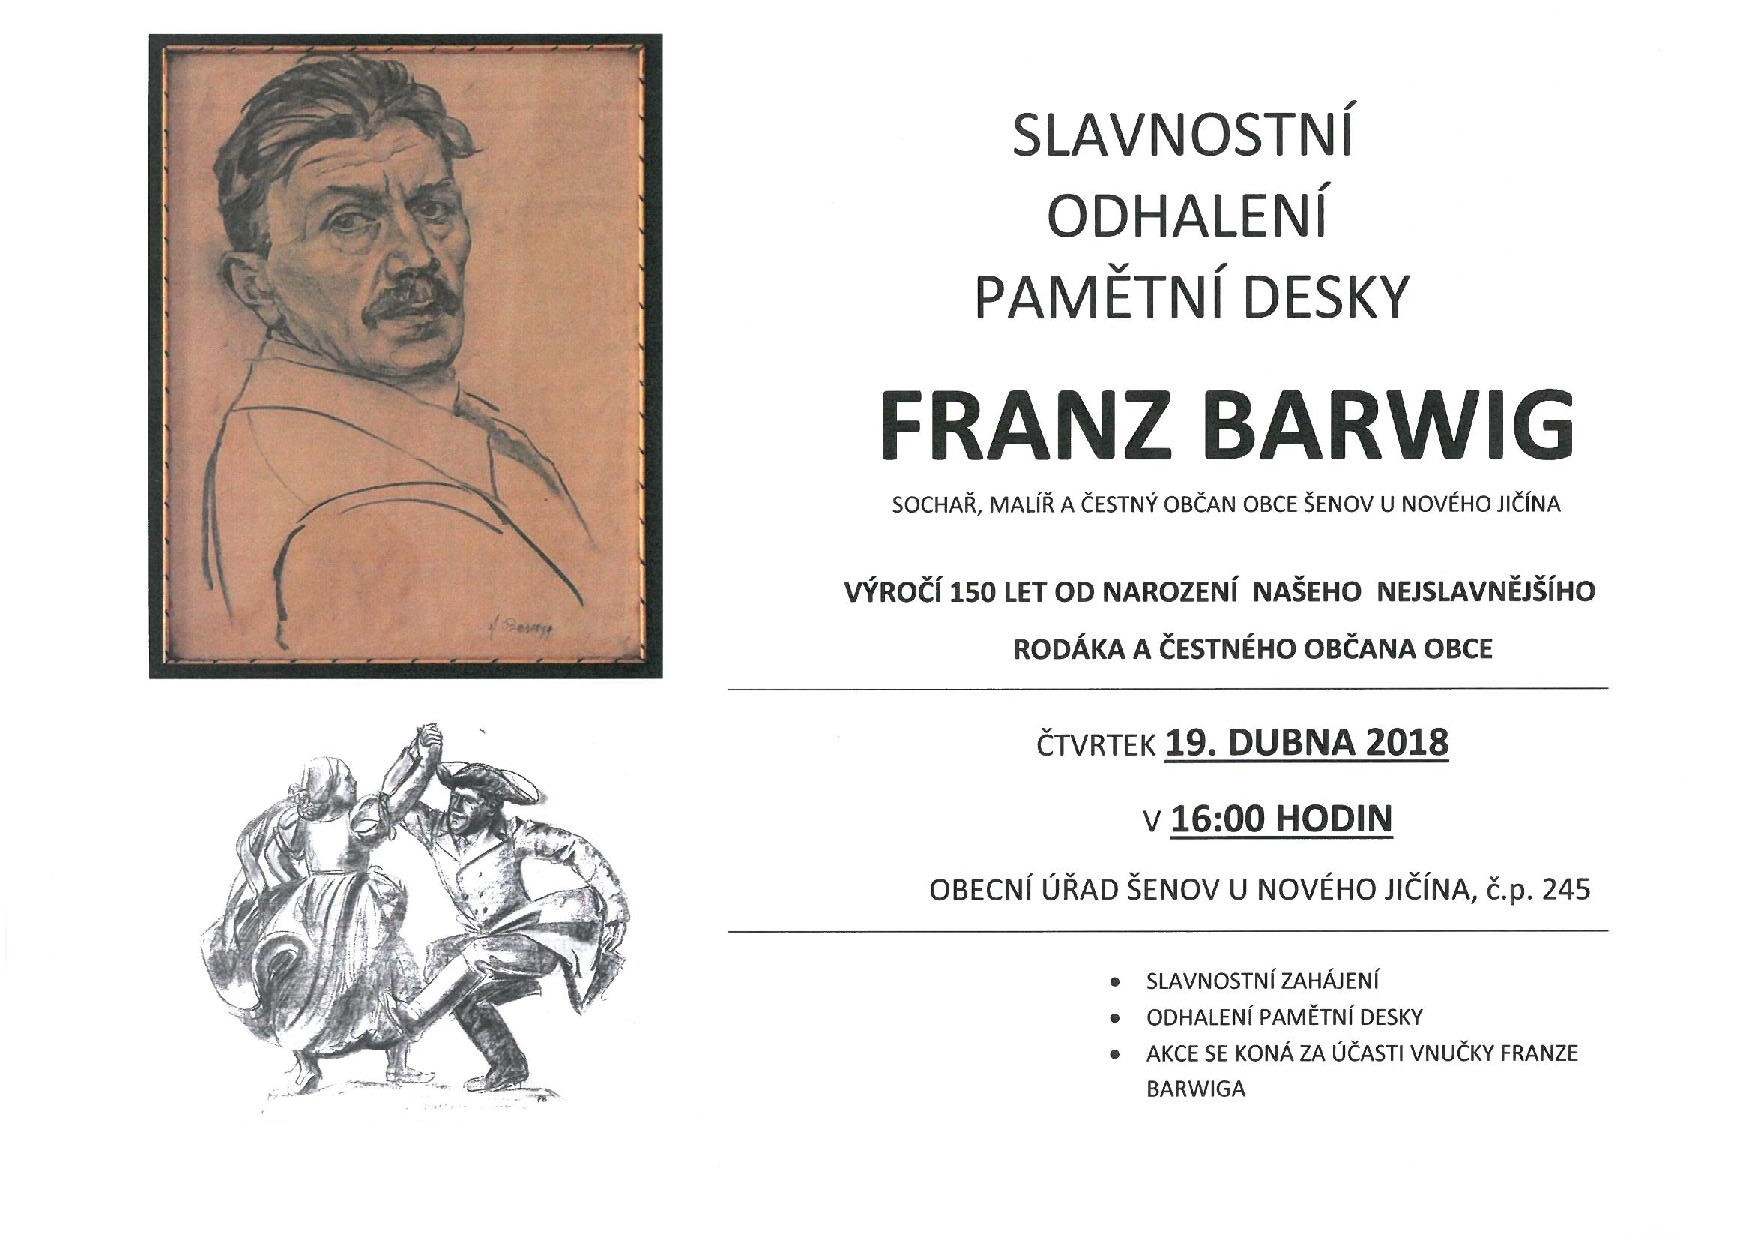 Franz Barwig pamet deska